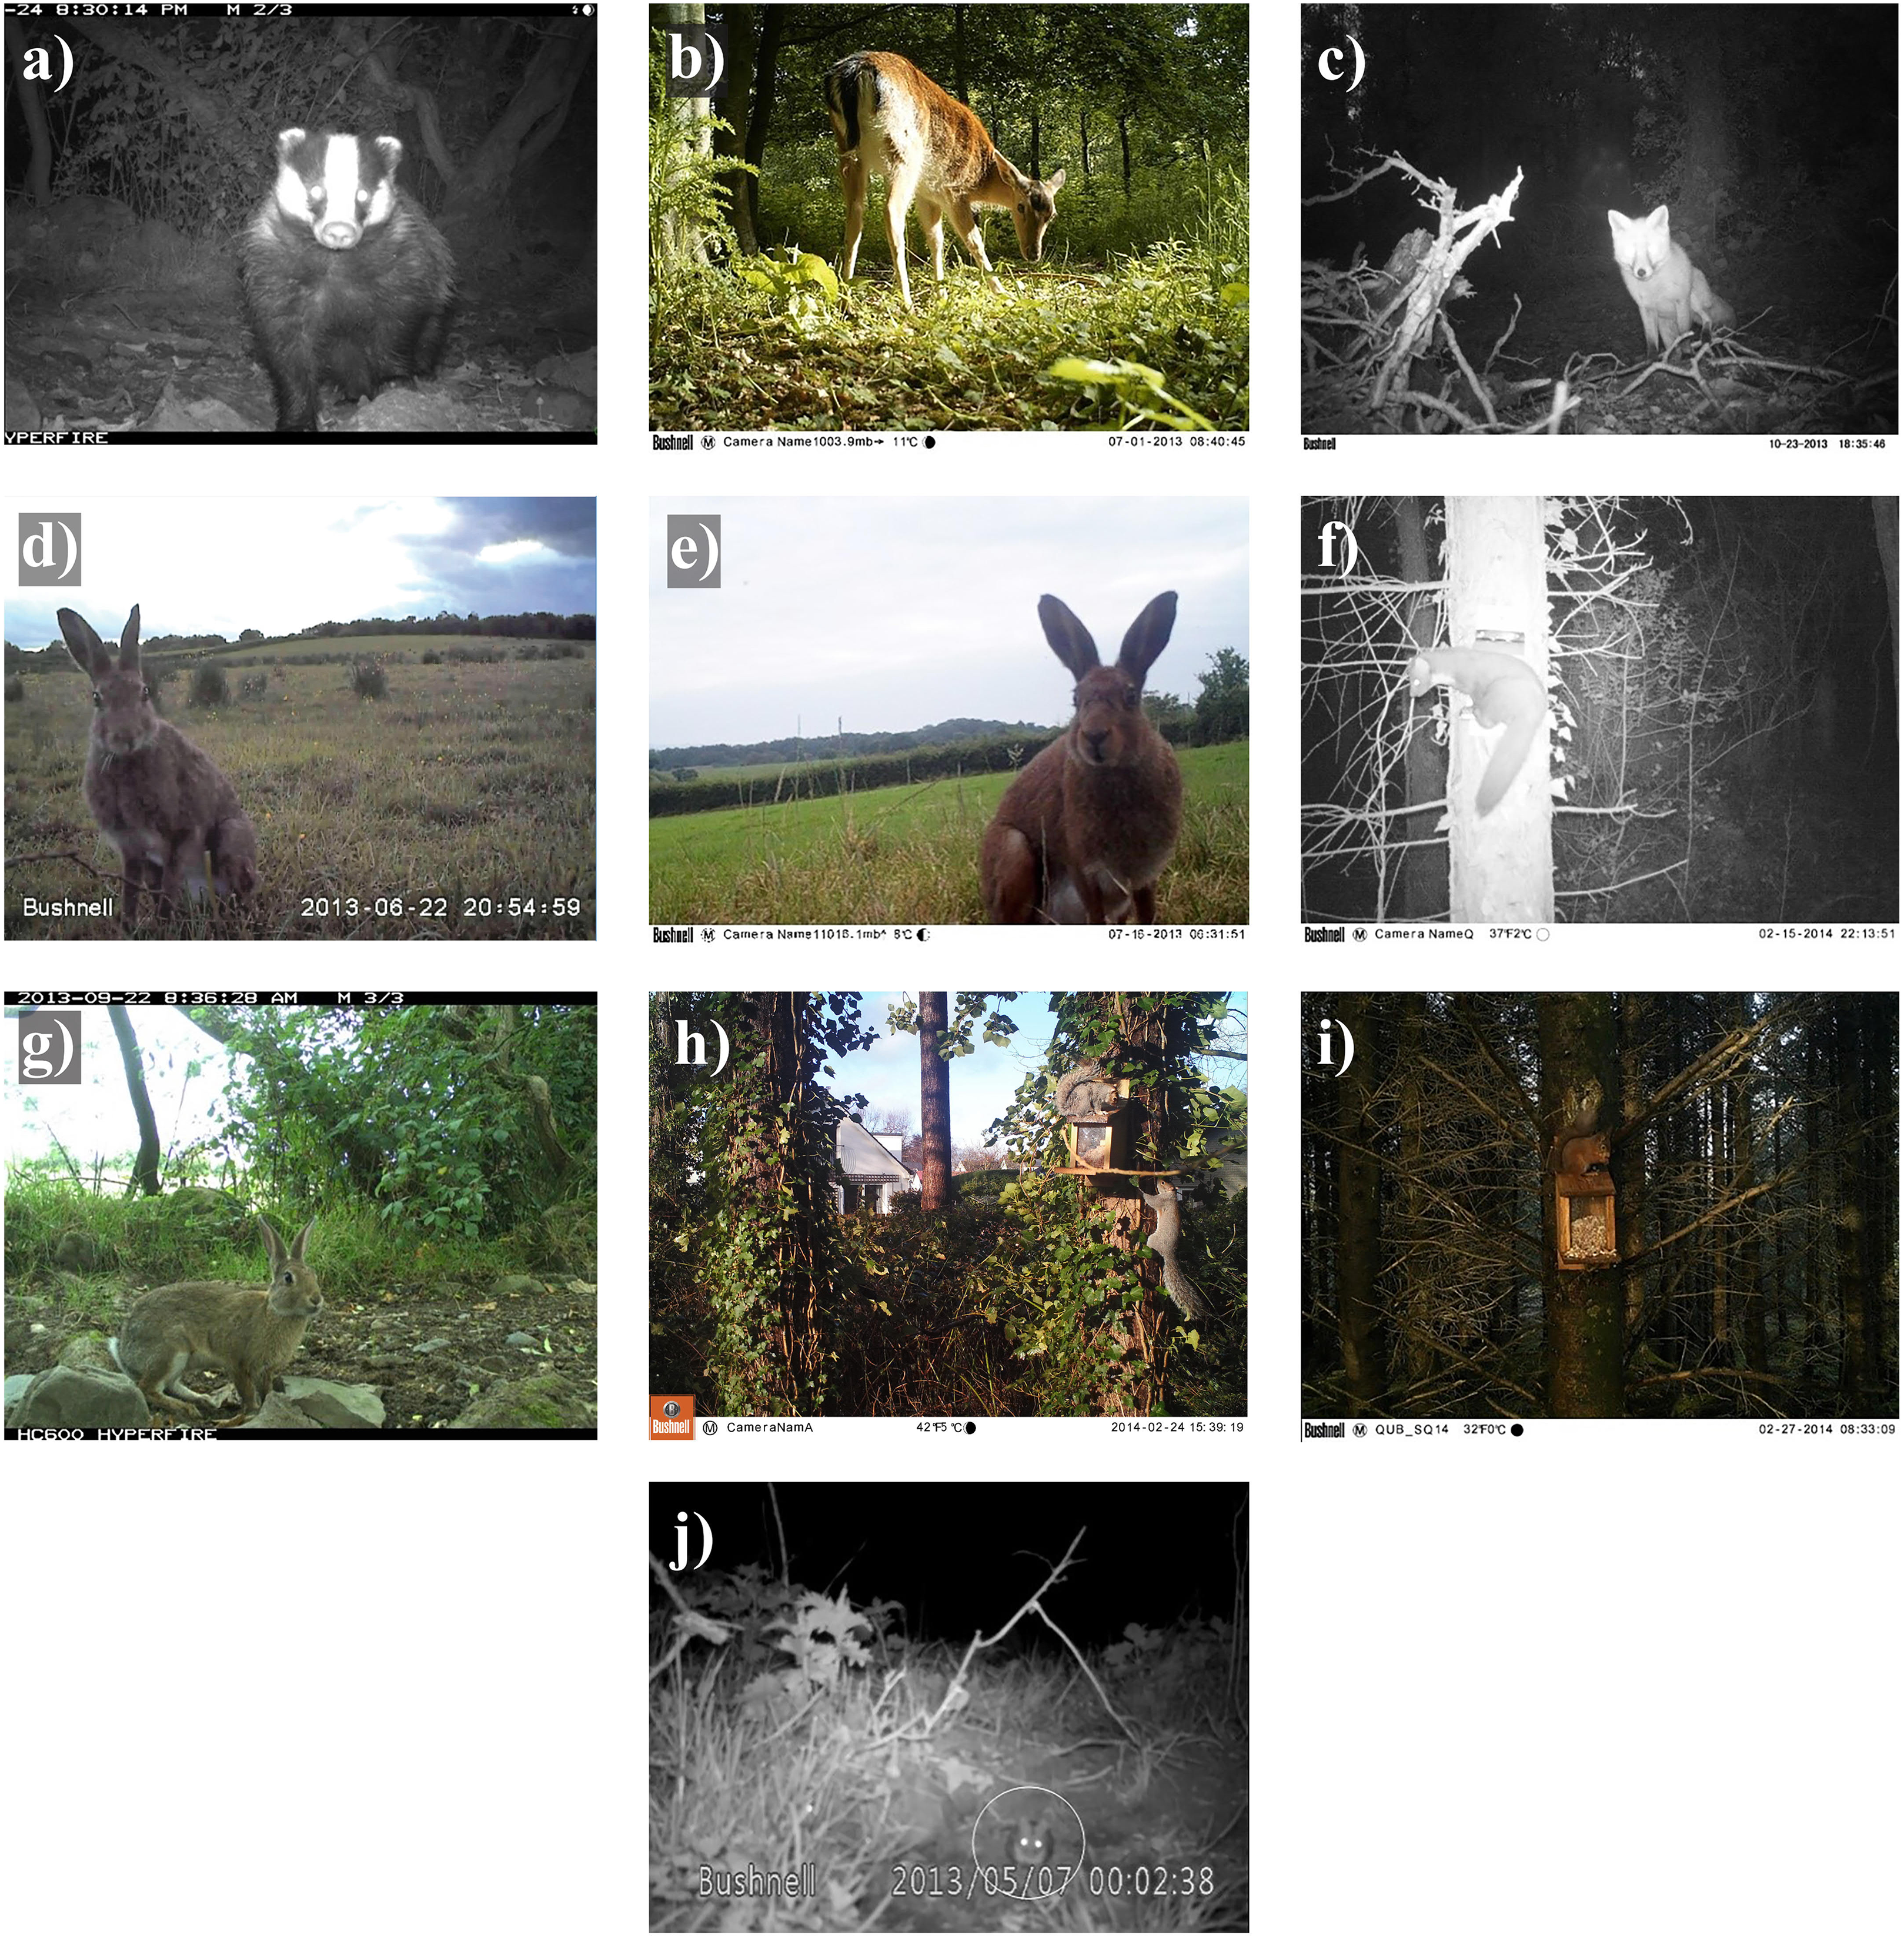 Seasonal and predator-prey effects on circadian activity of free-ranging  mammals revealed by camera traps [PeerJ]